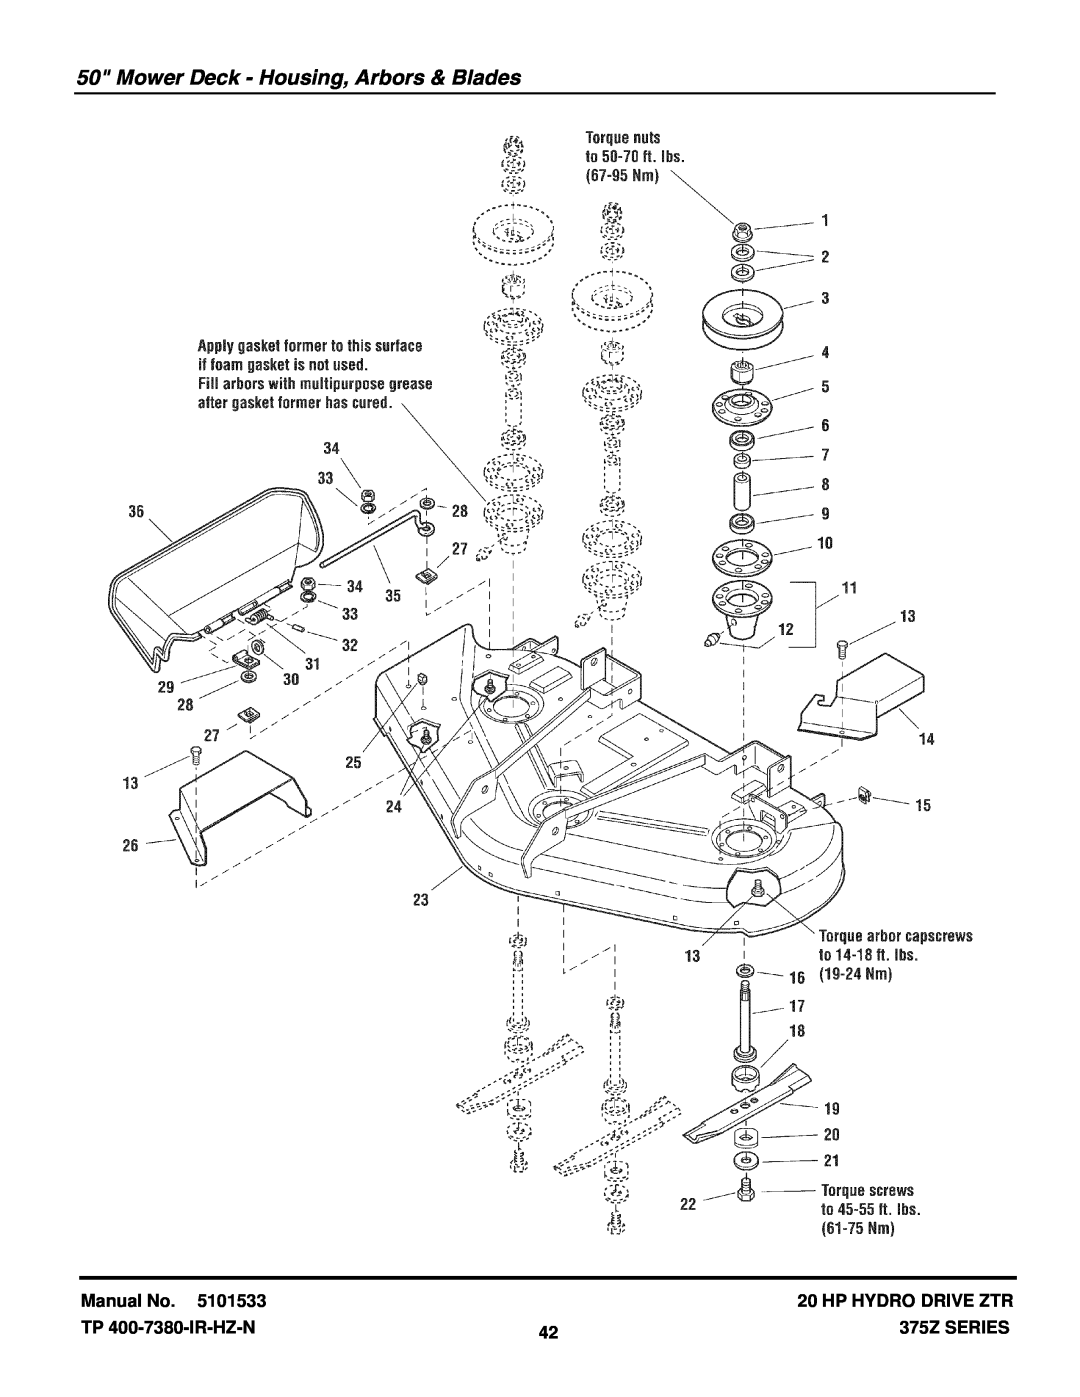 Snapper manual Mower Deck - Housing, Arbors & Blades, Manual No, Hp Hydro Drive Ztr, TP 400-7380-IR-HZ-N, 375Z SERIES 